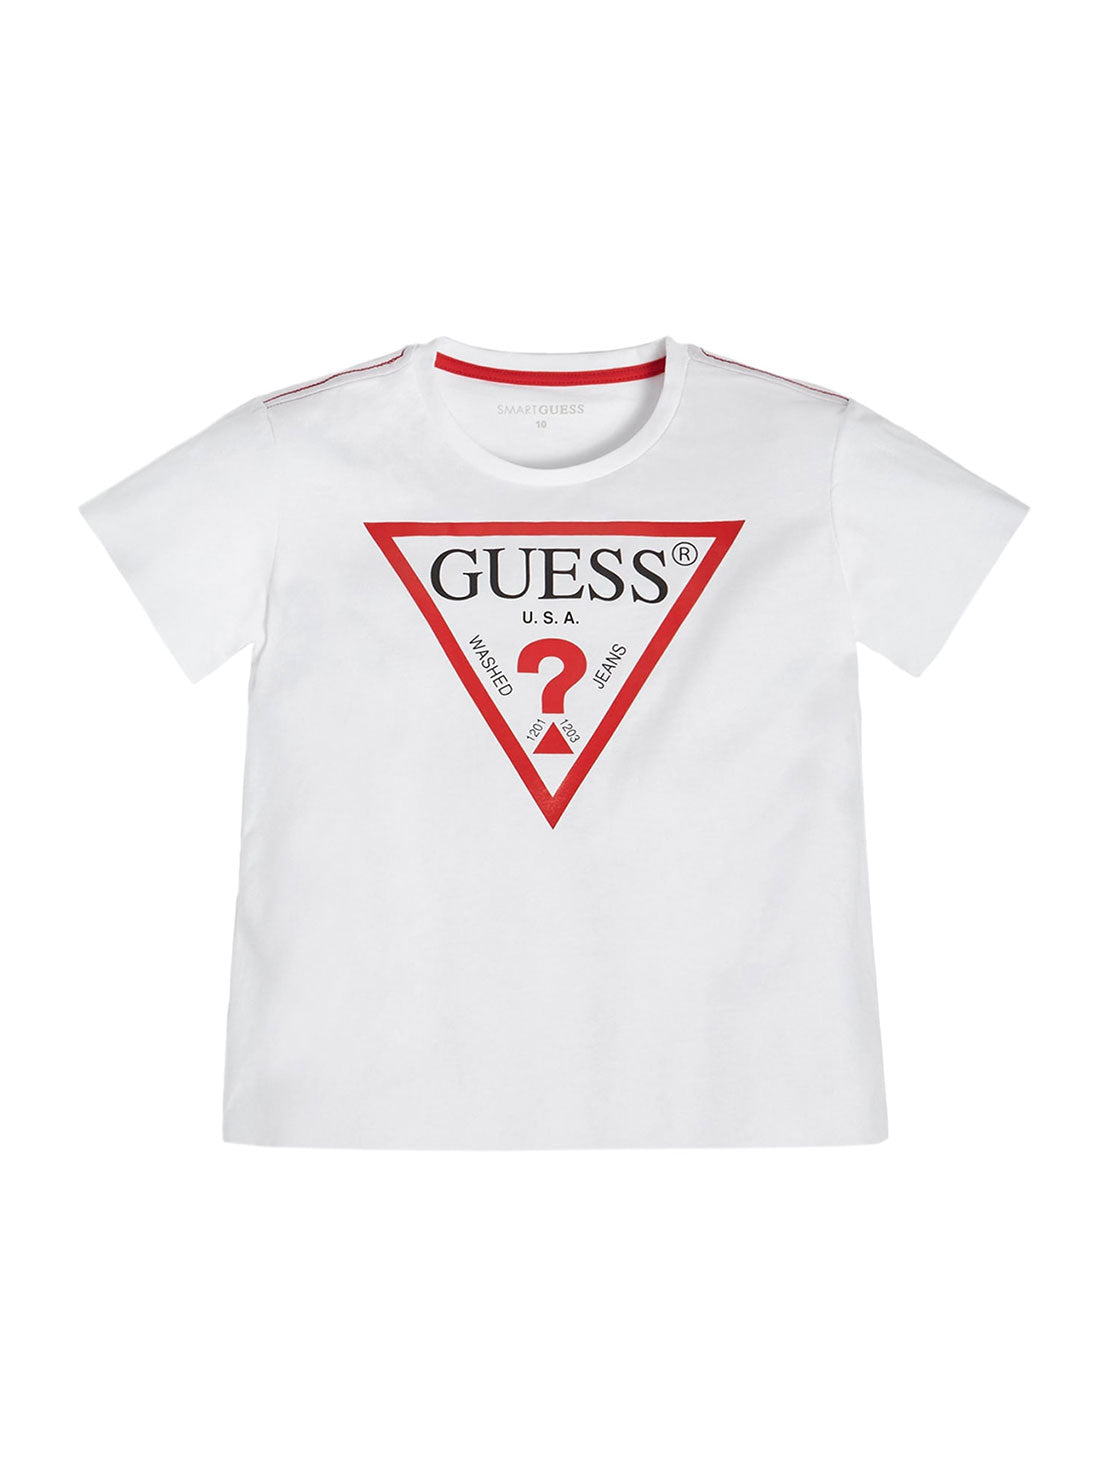 GUESS Little Boys White Logo Short Sleeve T-Shirt (2-7)  N73I55K8HM0 Front View